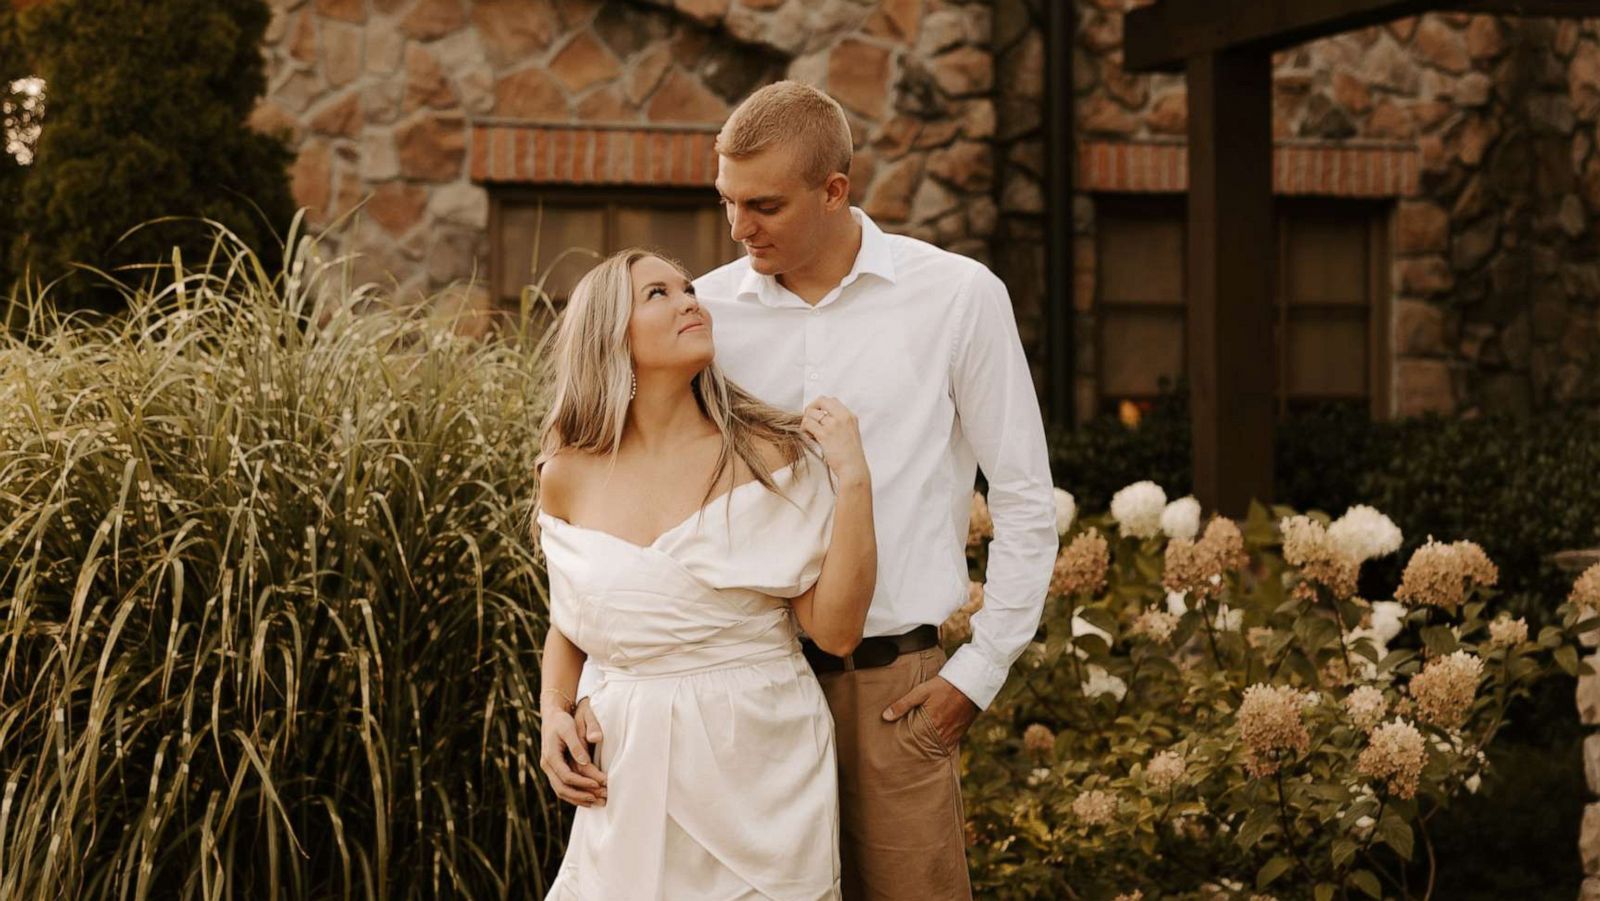 Pastel Pre-wedding Shoot in Lavender Gardens | Pre wedding photoshoot  outfit, Pre wedding poses, Pre wedding photoshoot outdoor